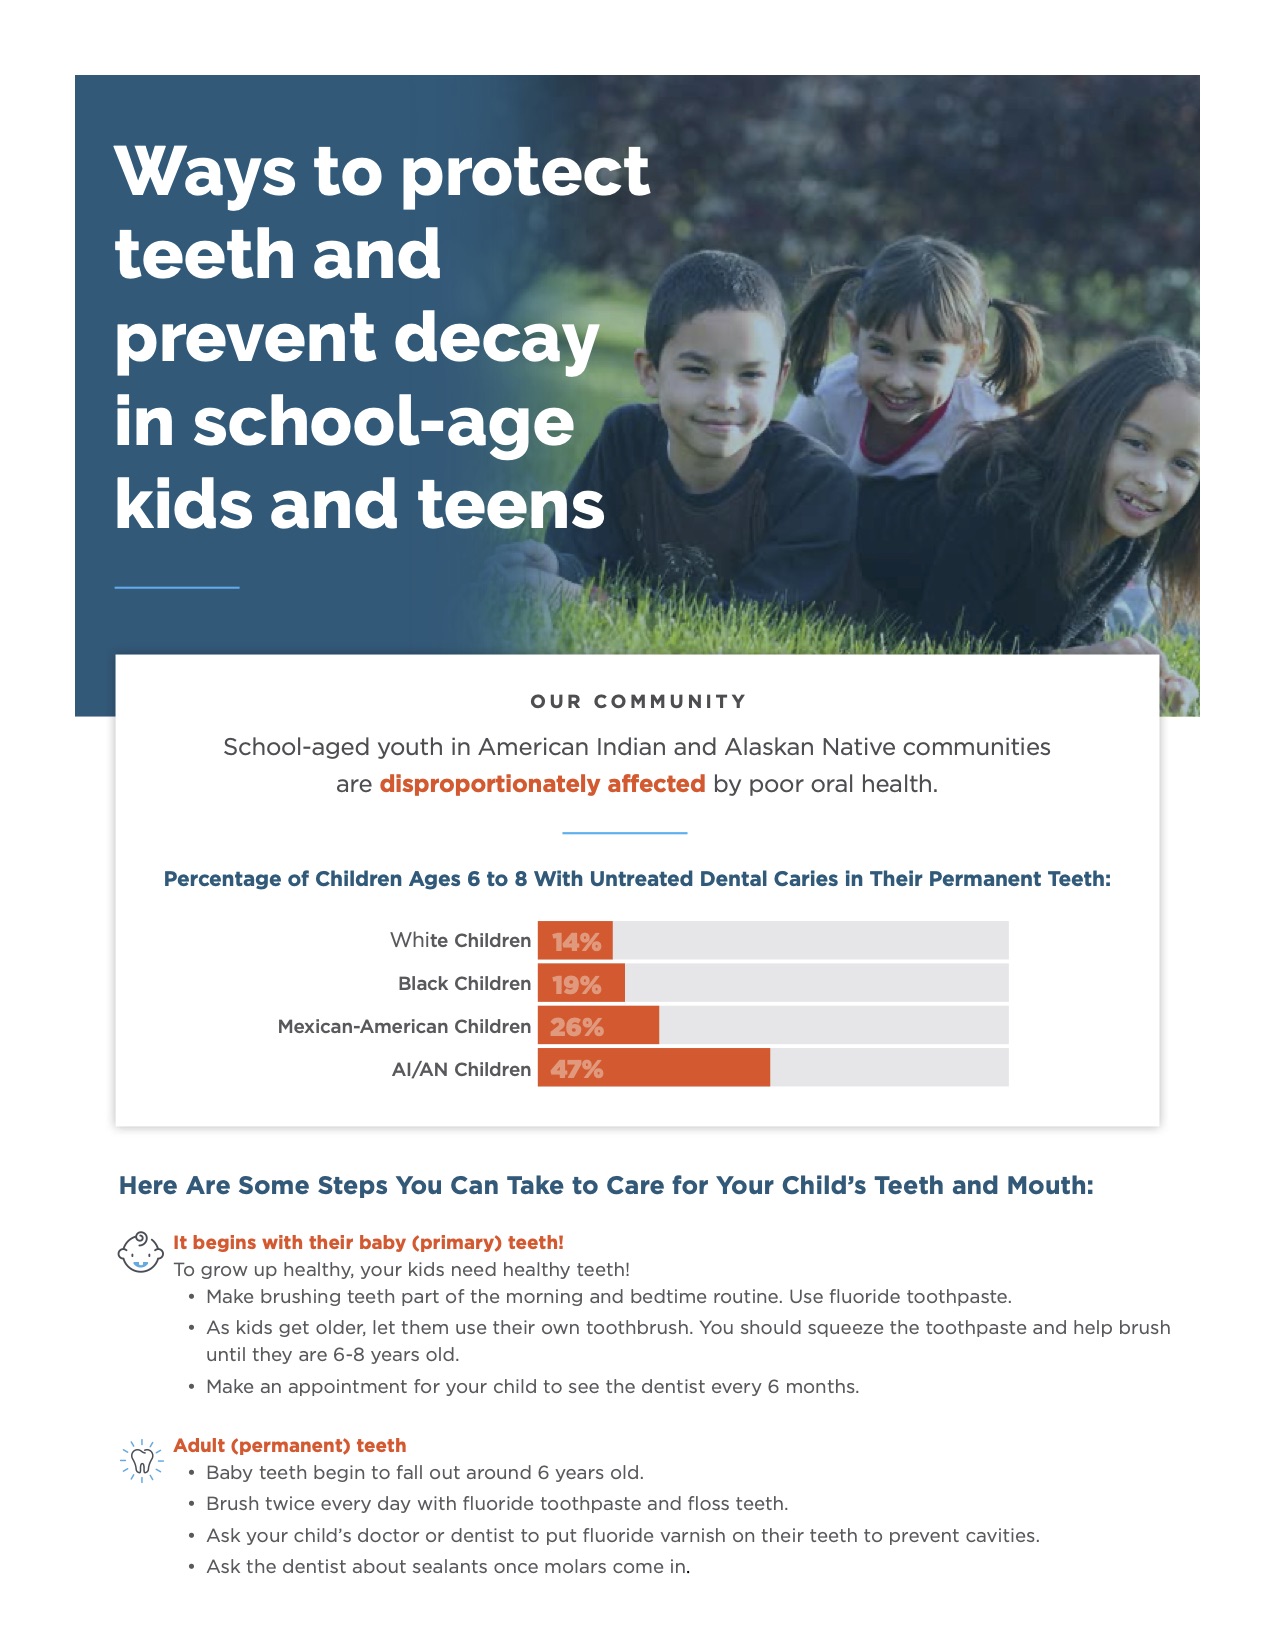 Ways to protect school aged teeth flyer